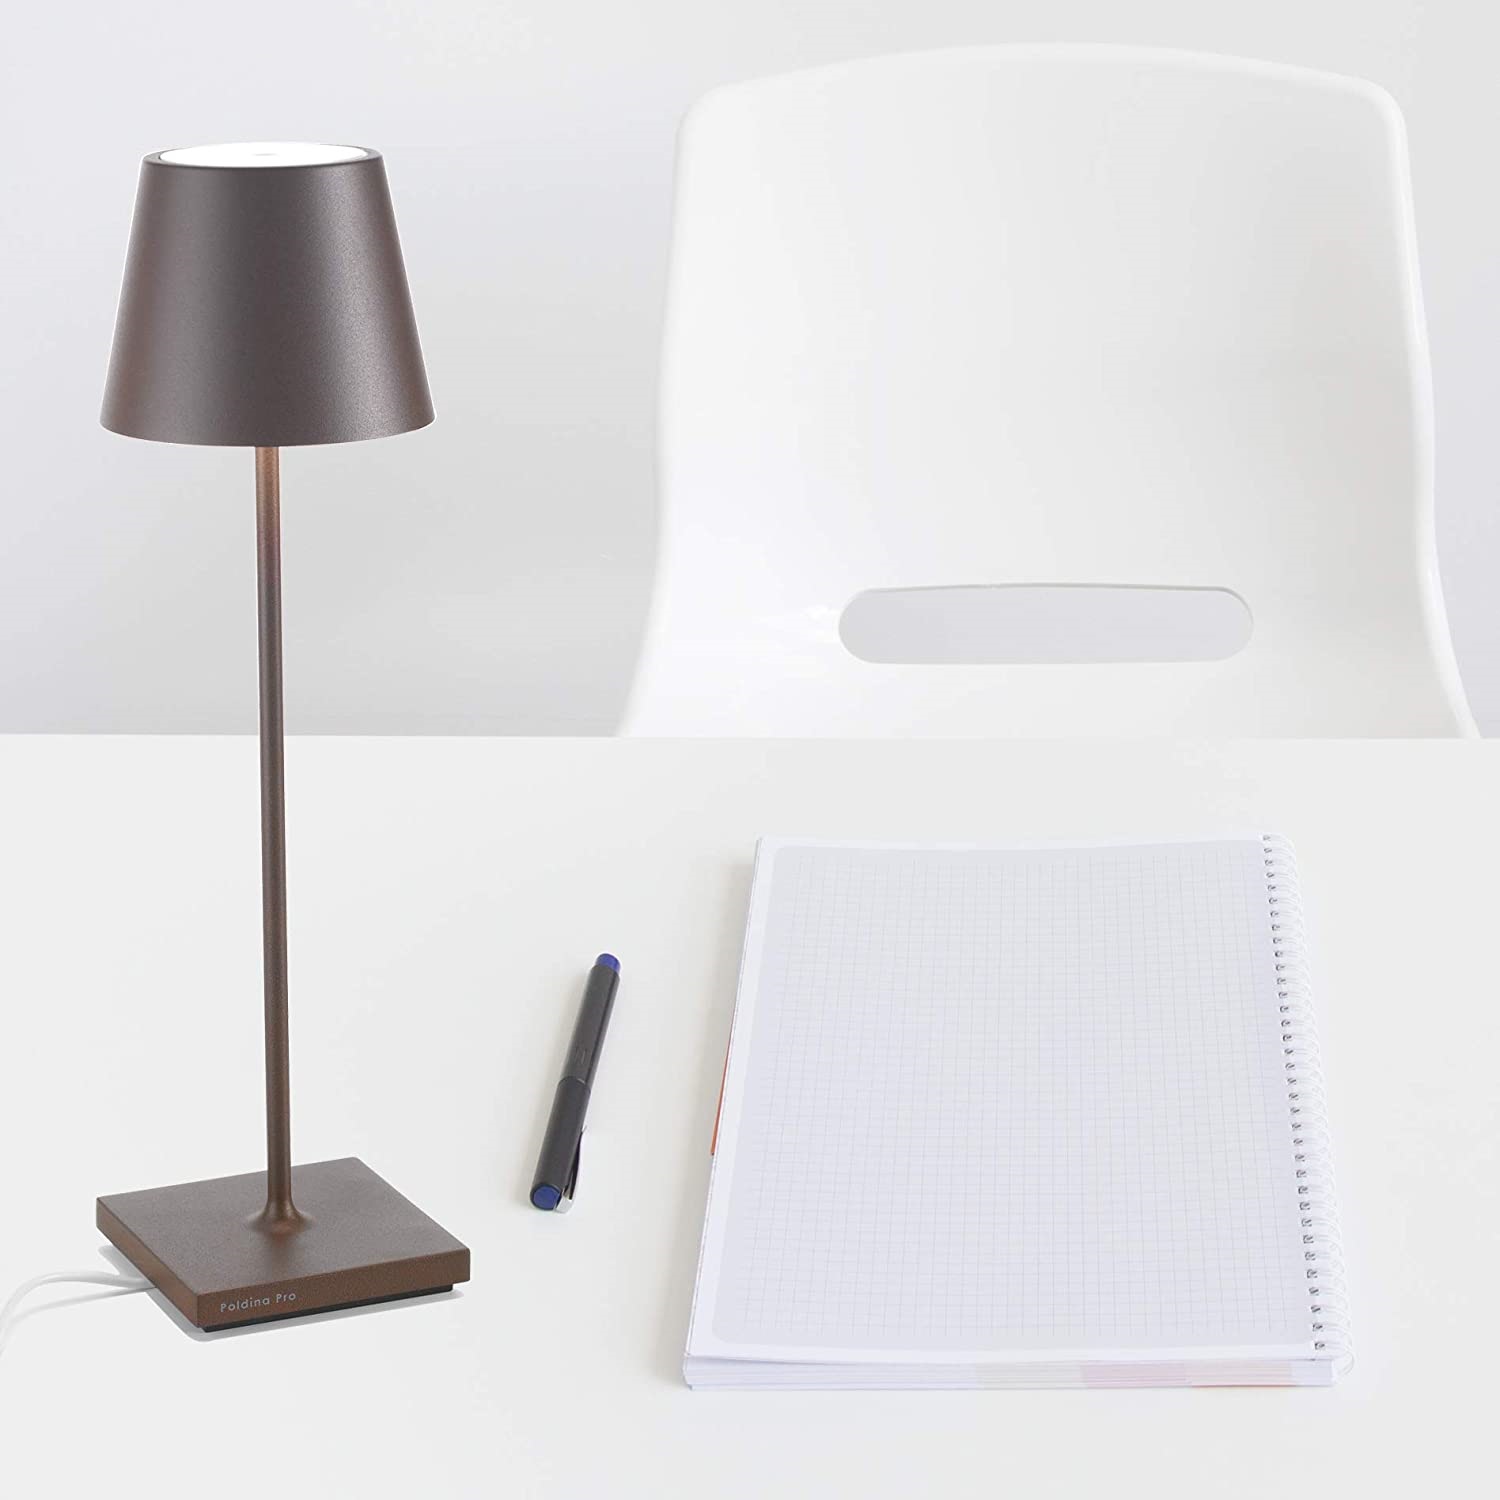 Lampe-de-table-LED-Zafferano-Poldrina-Pro